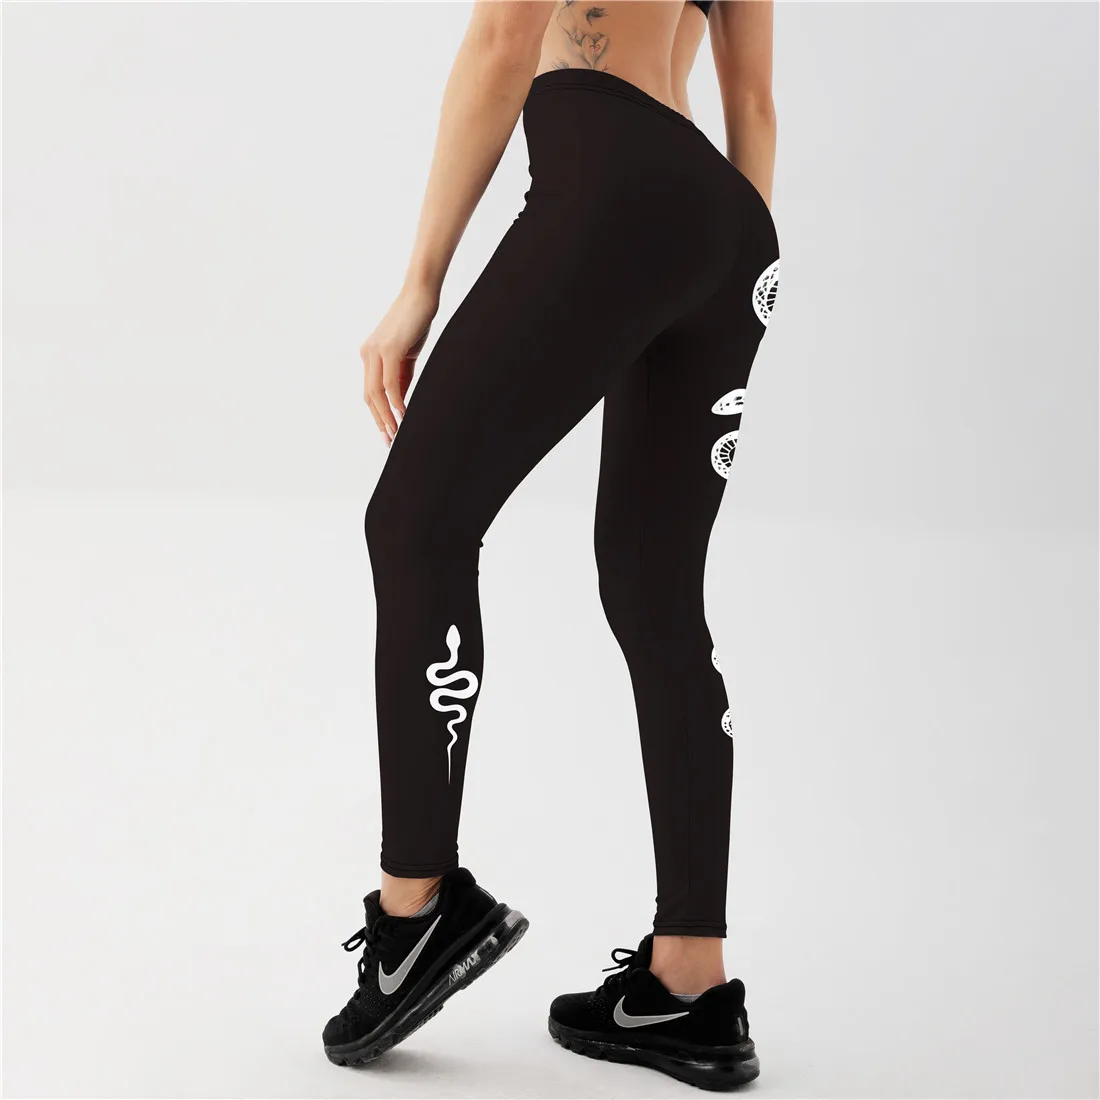 Sexy Women's Black Leggings Print Animal Snake Push Up Fitness Legging Slim workout | Женская одежда